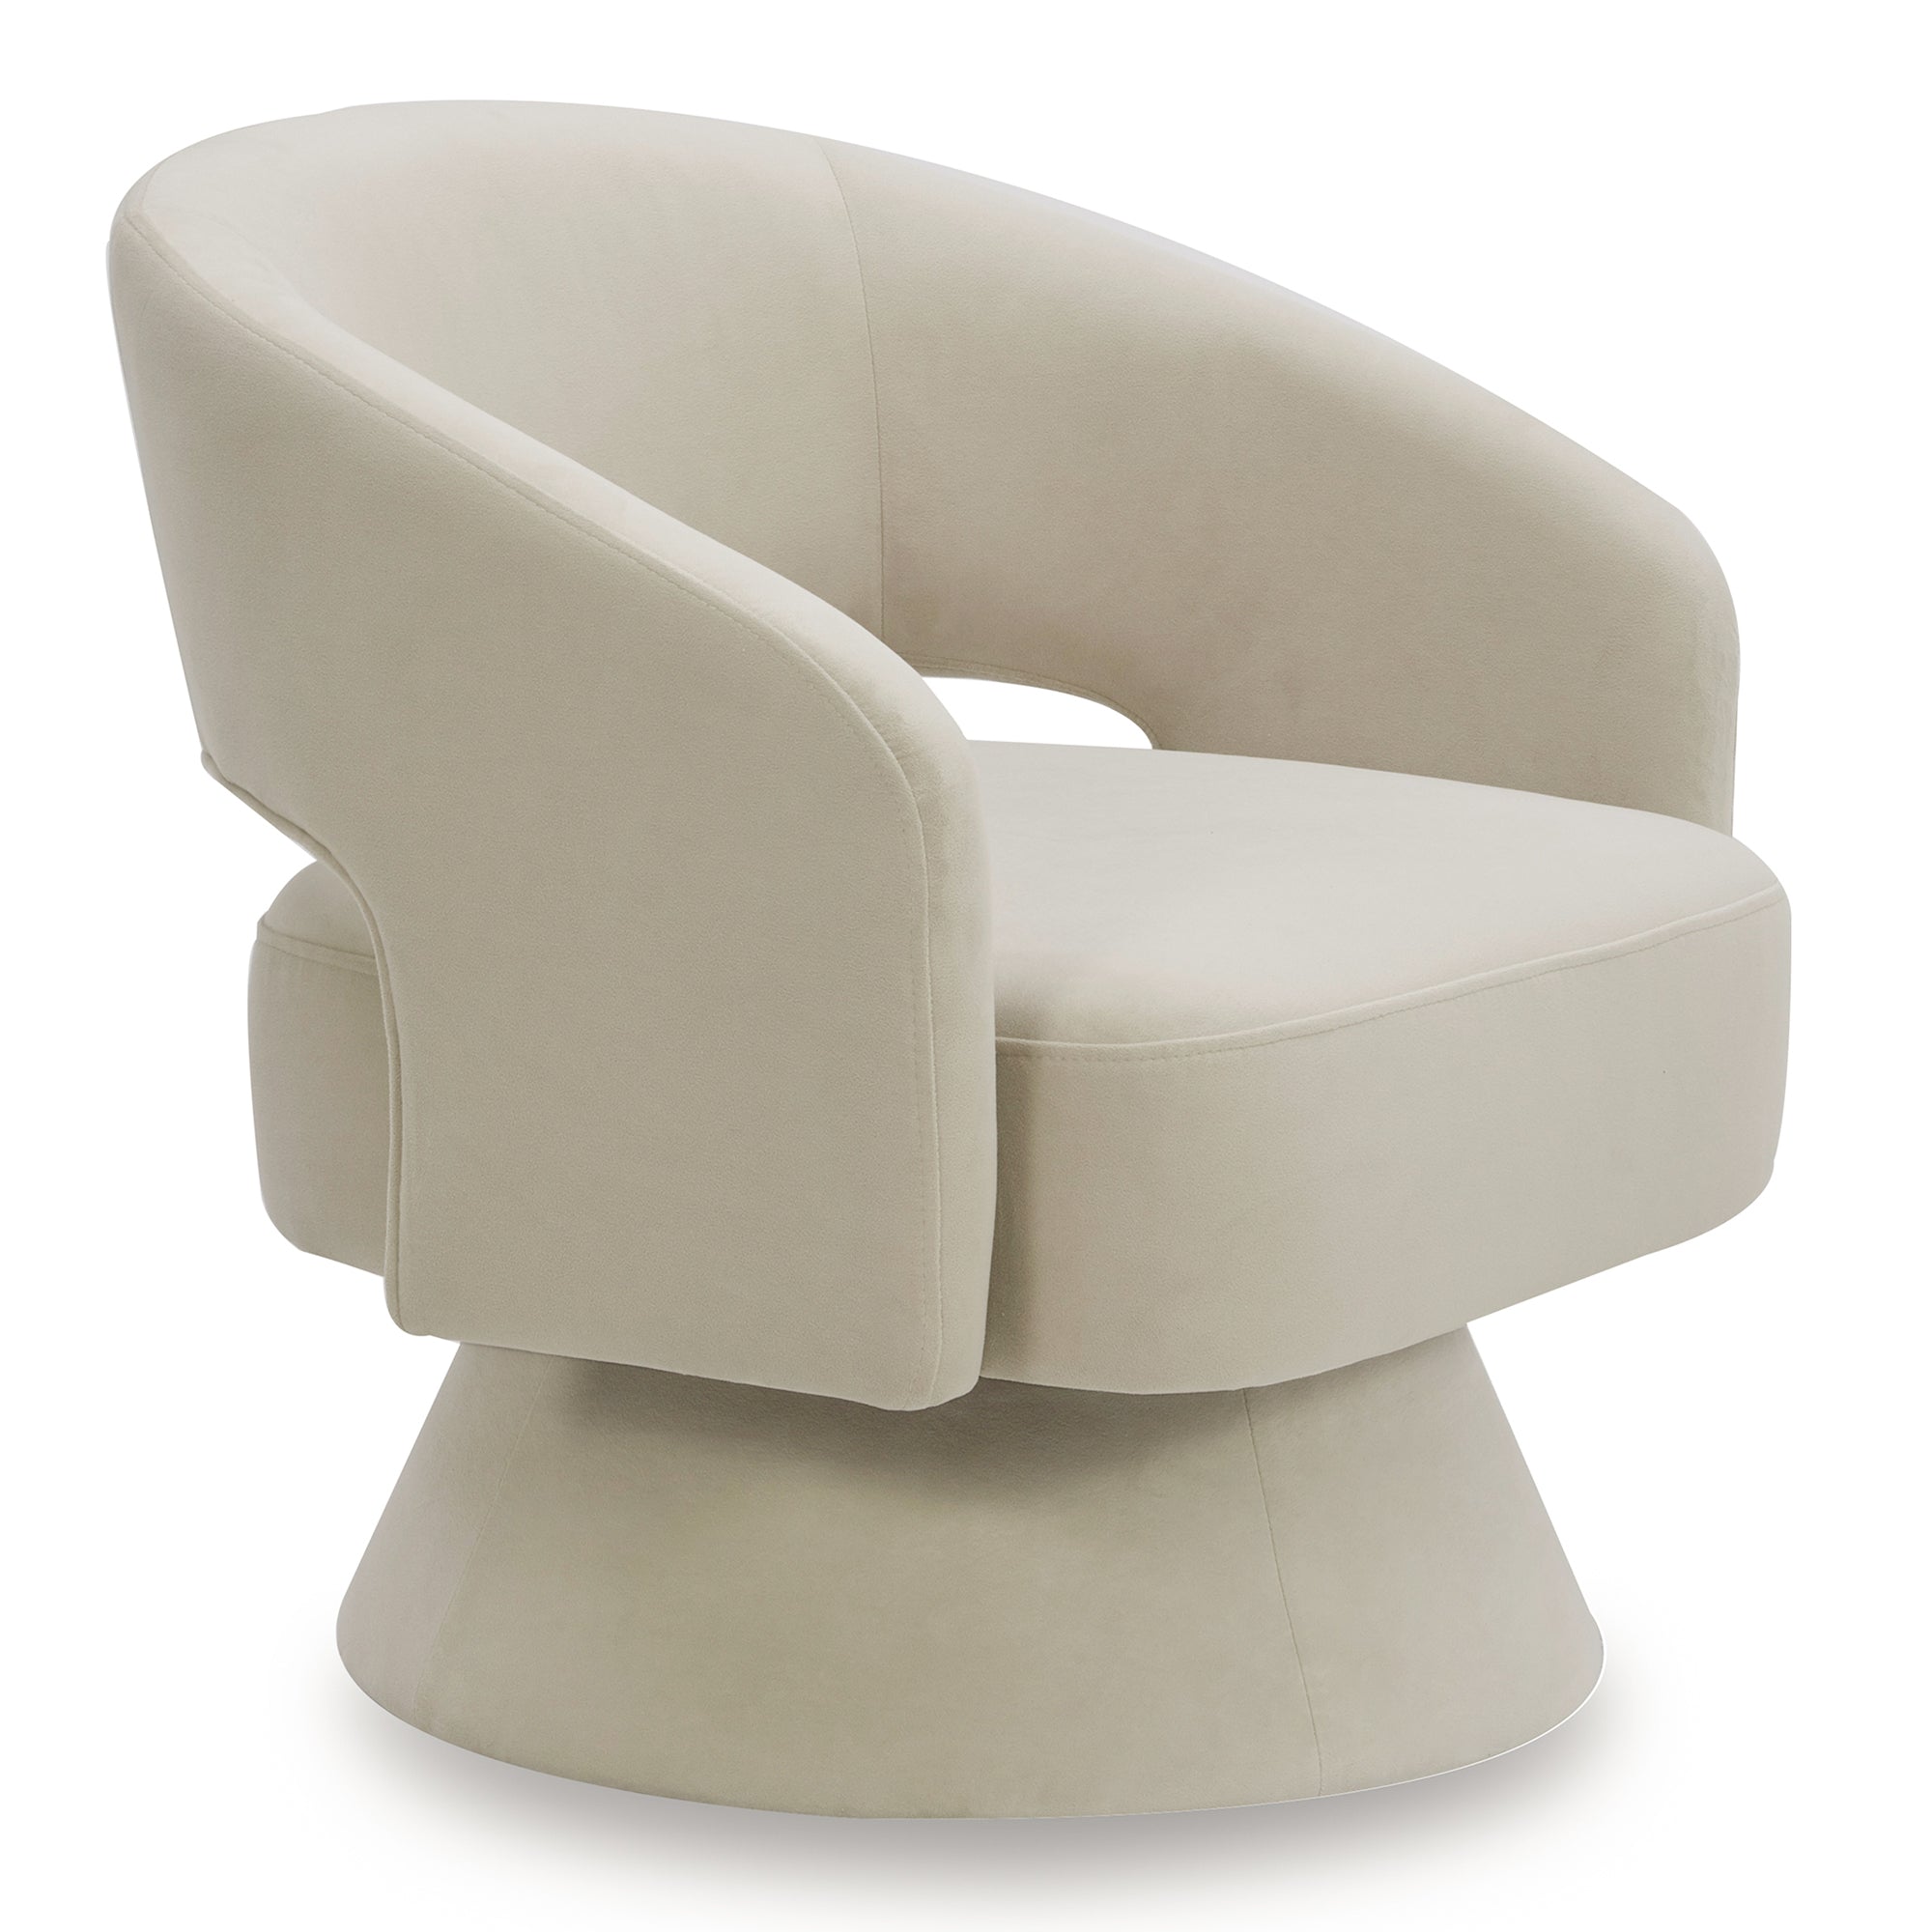 CHITA LIVING-Ambre Swivel Accent Chair-Accent Chair-Velvet-Creamy Gray-